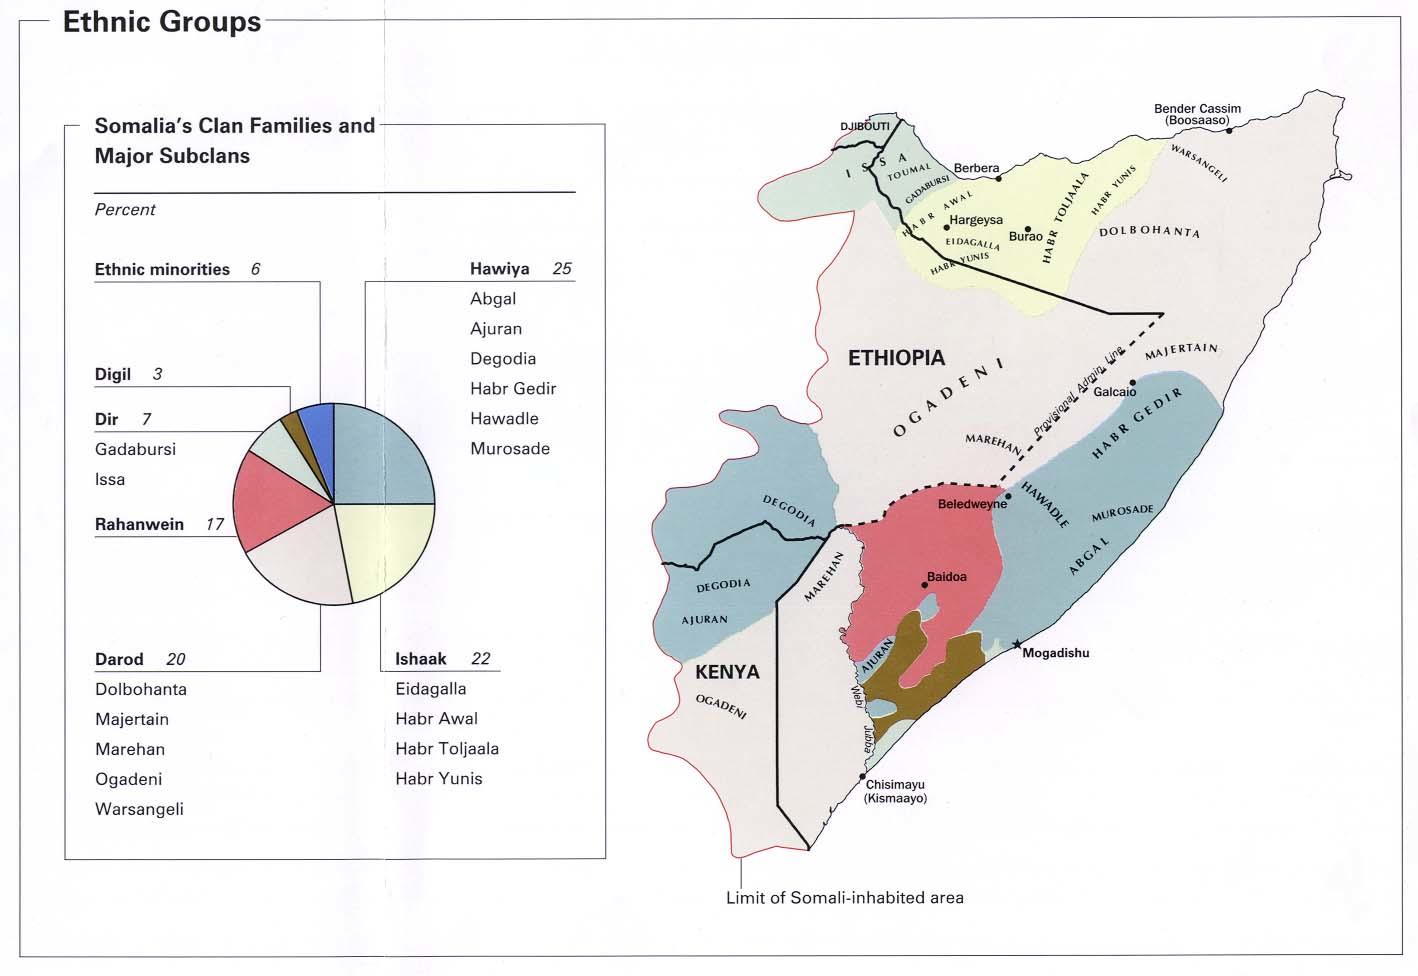 Ethnic Groups of Somalia.